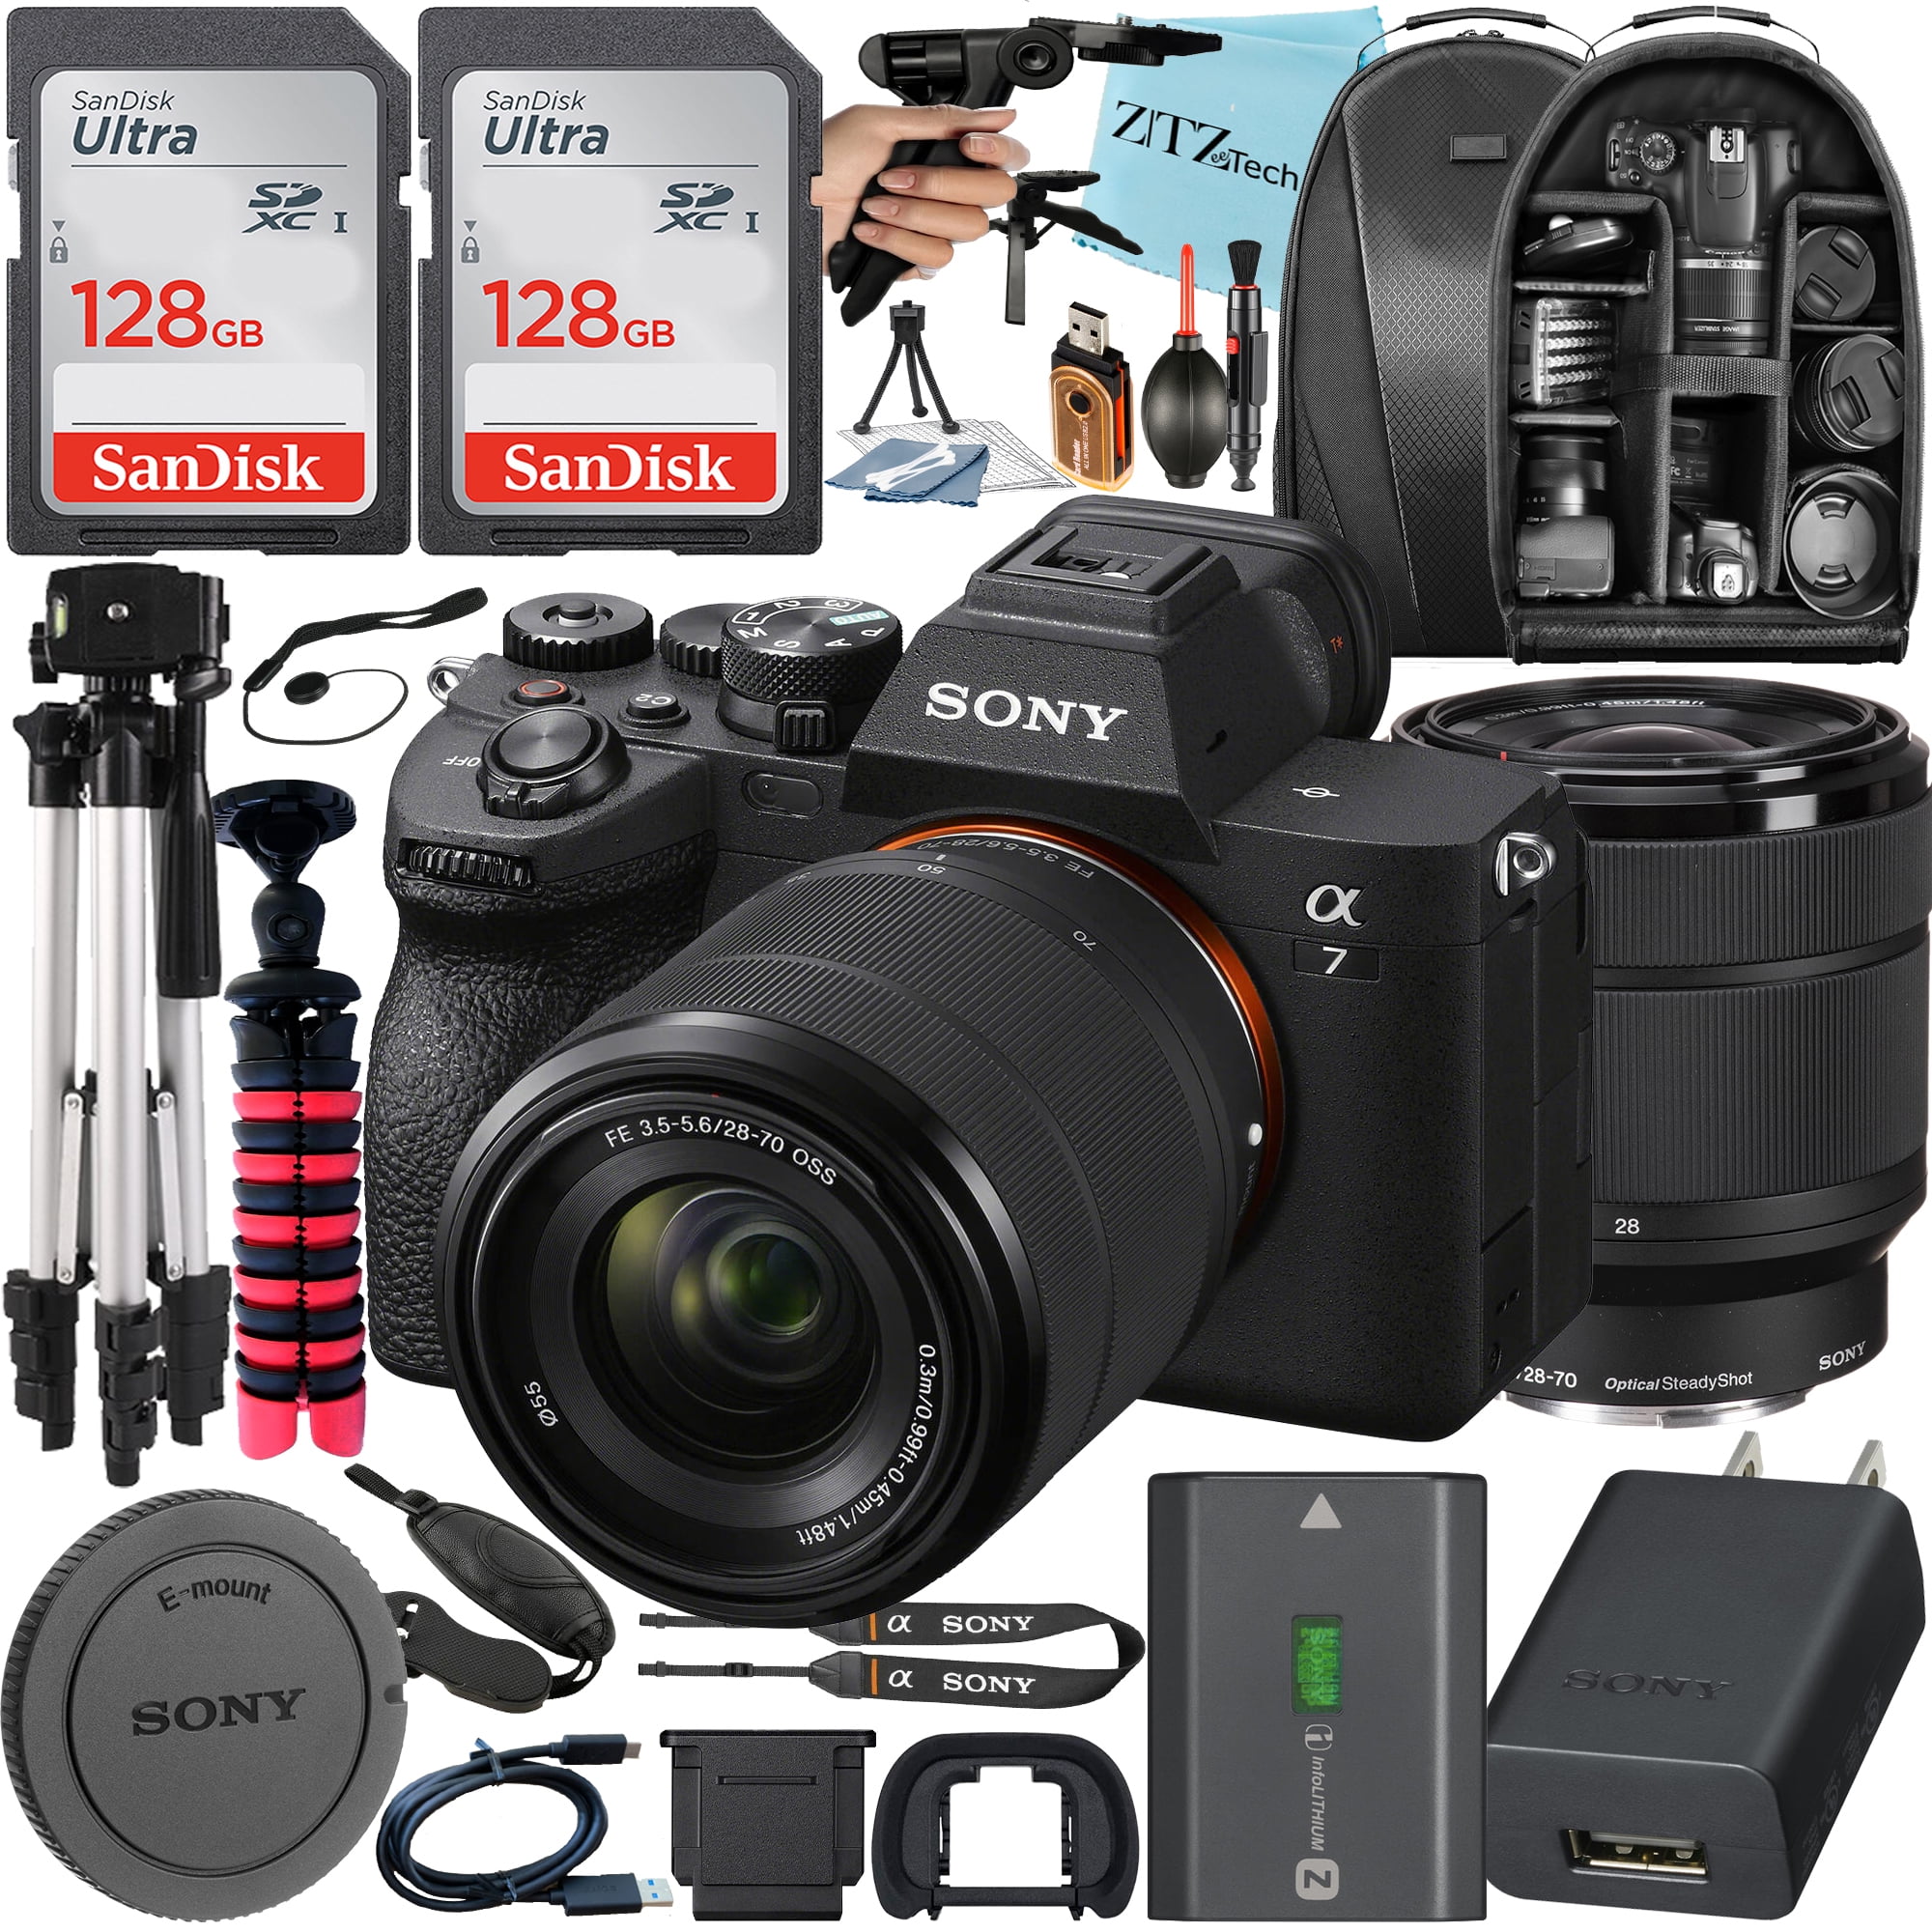 Sony Alpha a7 IV Mirrorless Digital Camera with FE 28-70mm Lens Pack  SanDisk 128GB Card Case Tripod ZeeTech Accessory Bundle